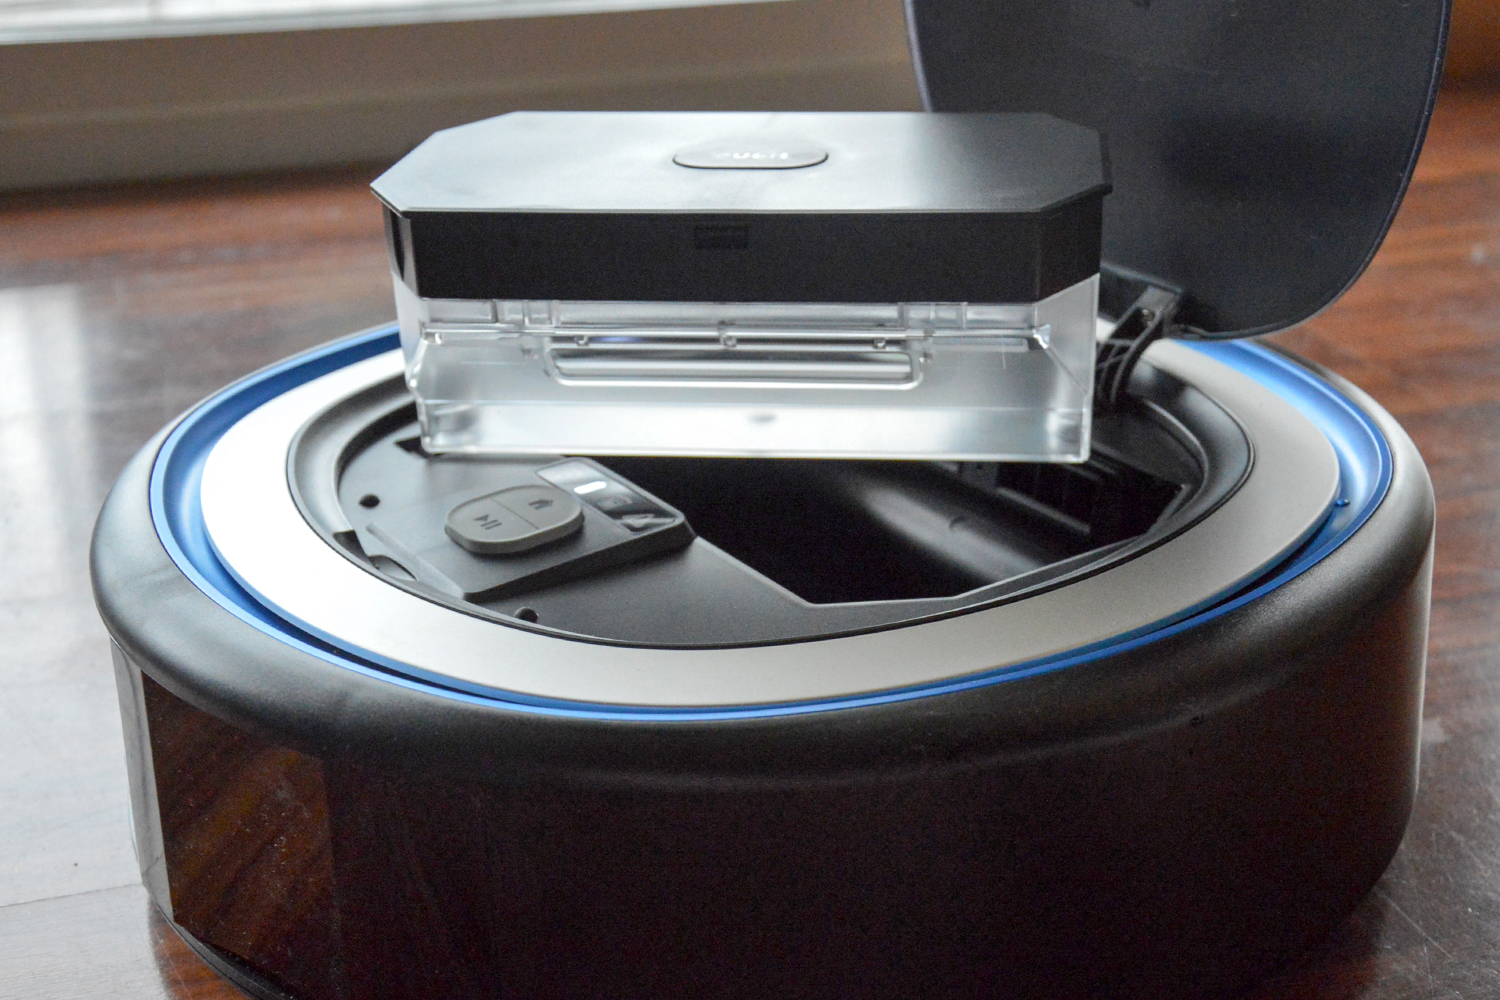 Hoover Rogue 970 robot vacuum review dust bin close